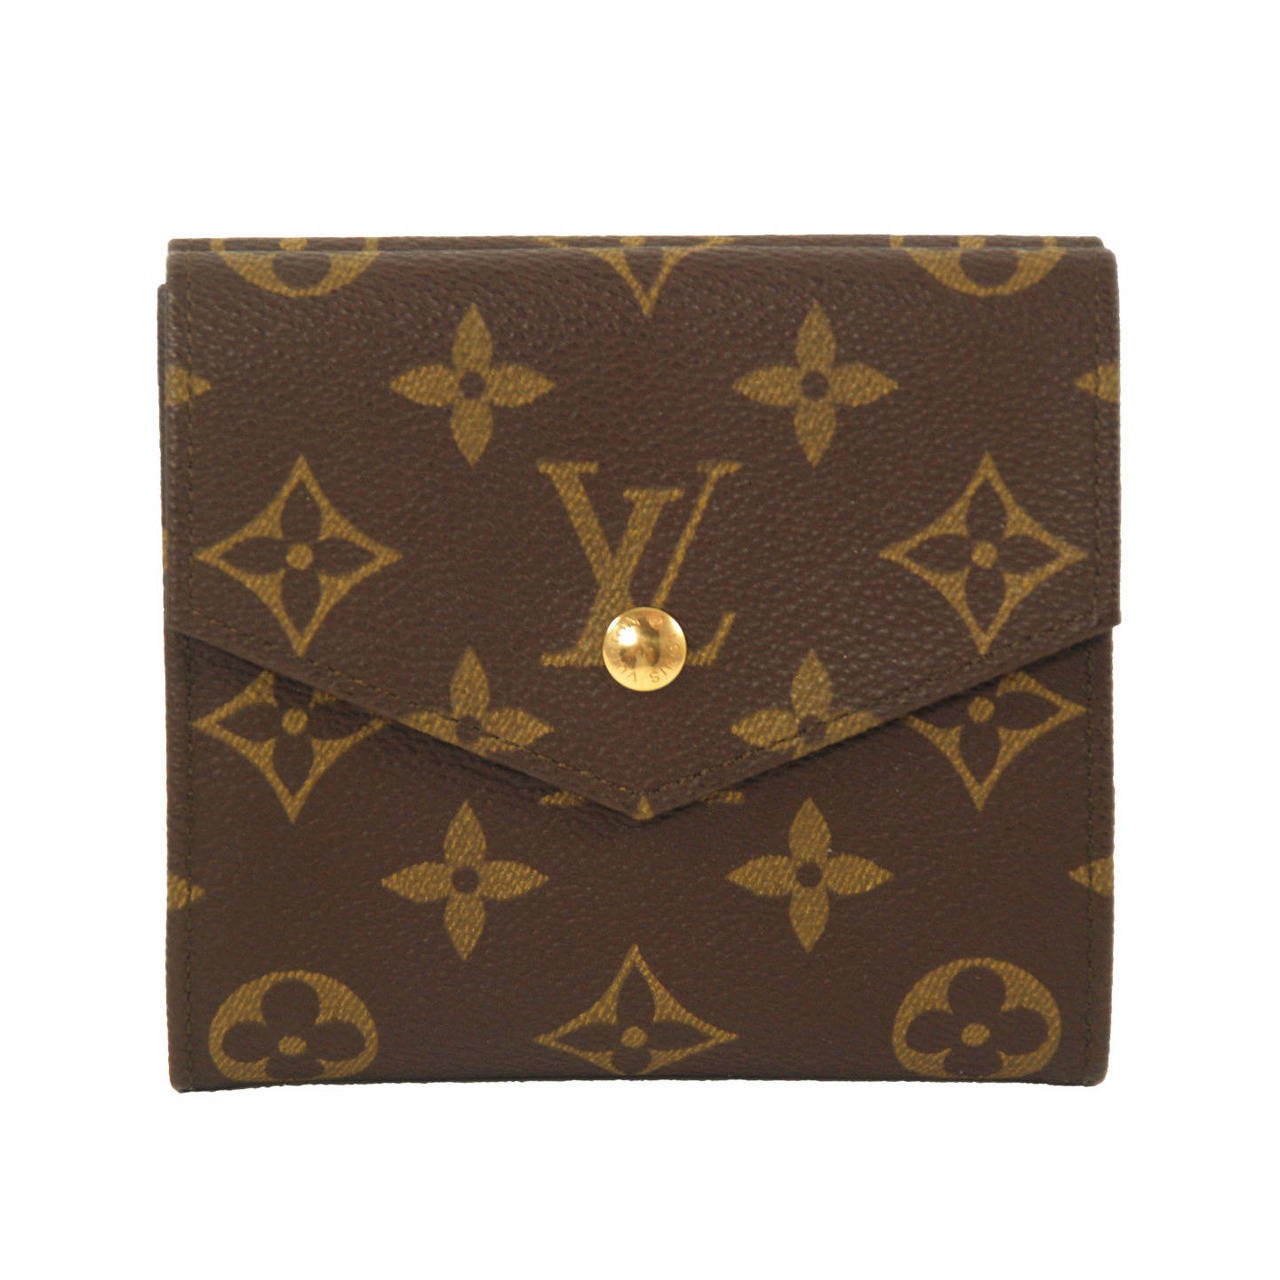 Vintage Louis Vuitton Monogram Canvas Wallet. at 1stdibs